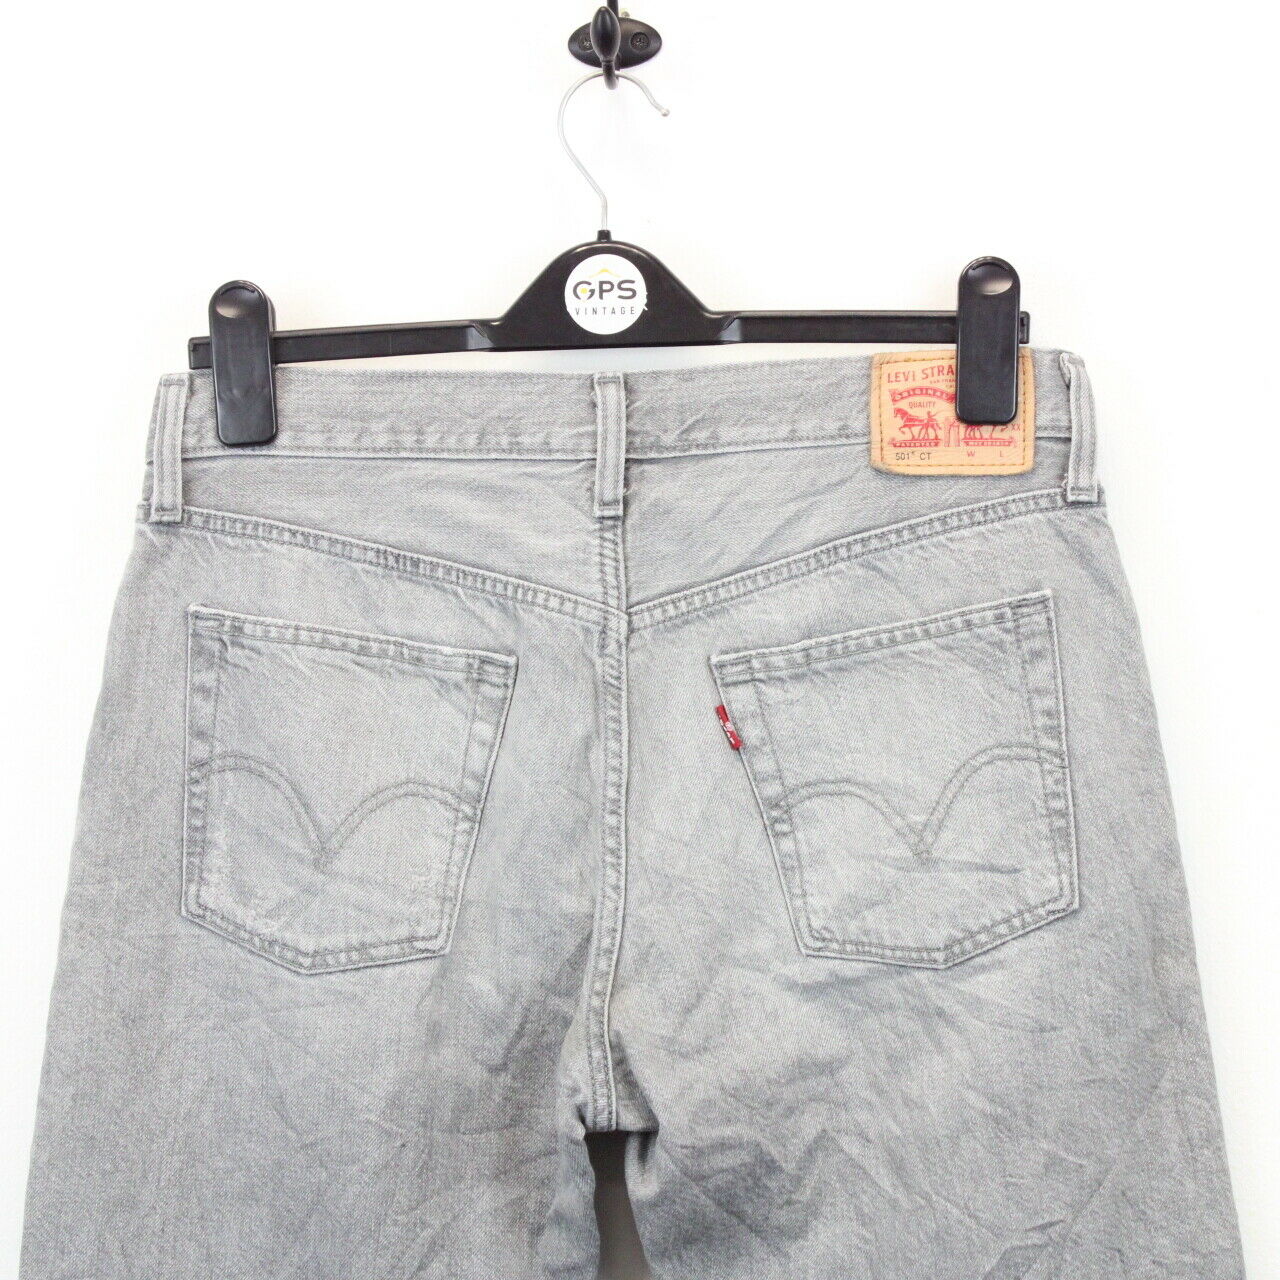 LEVIS 501 CT Jeans Grey Charcoal | W33 L30